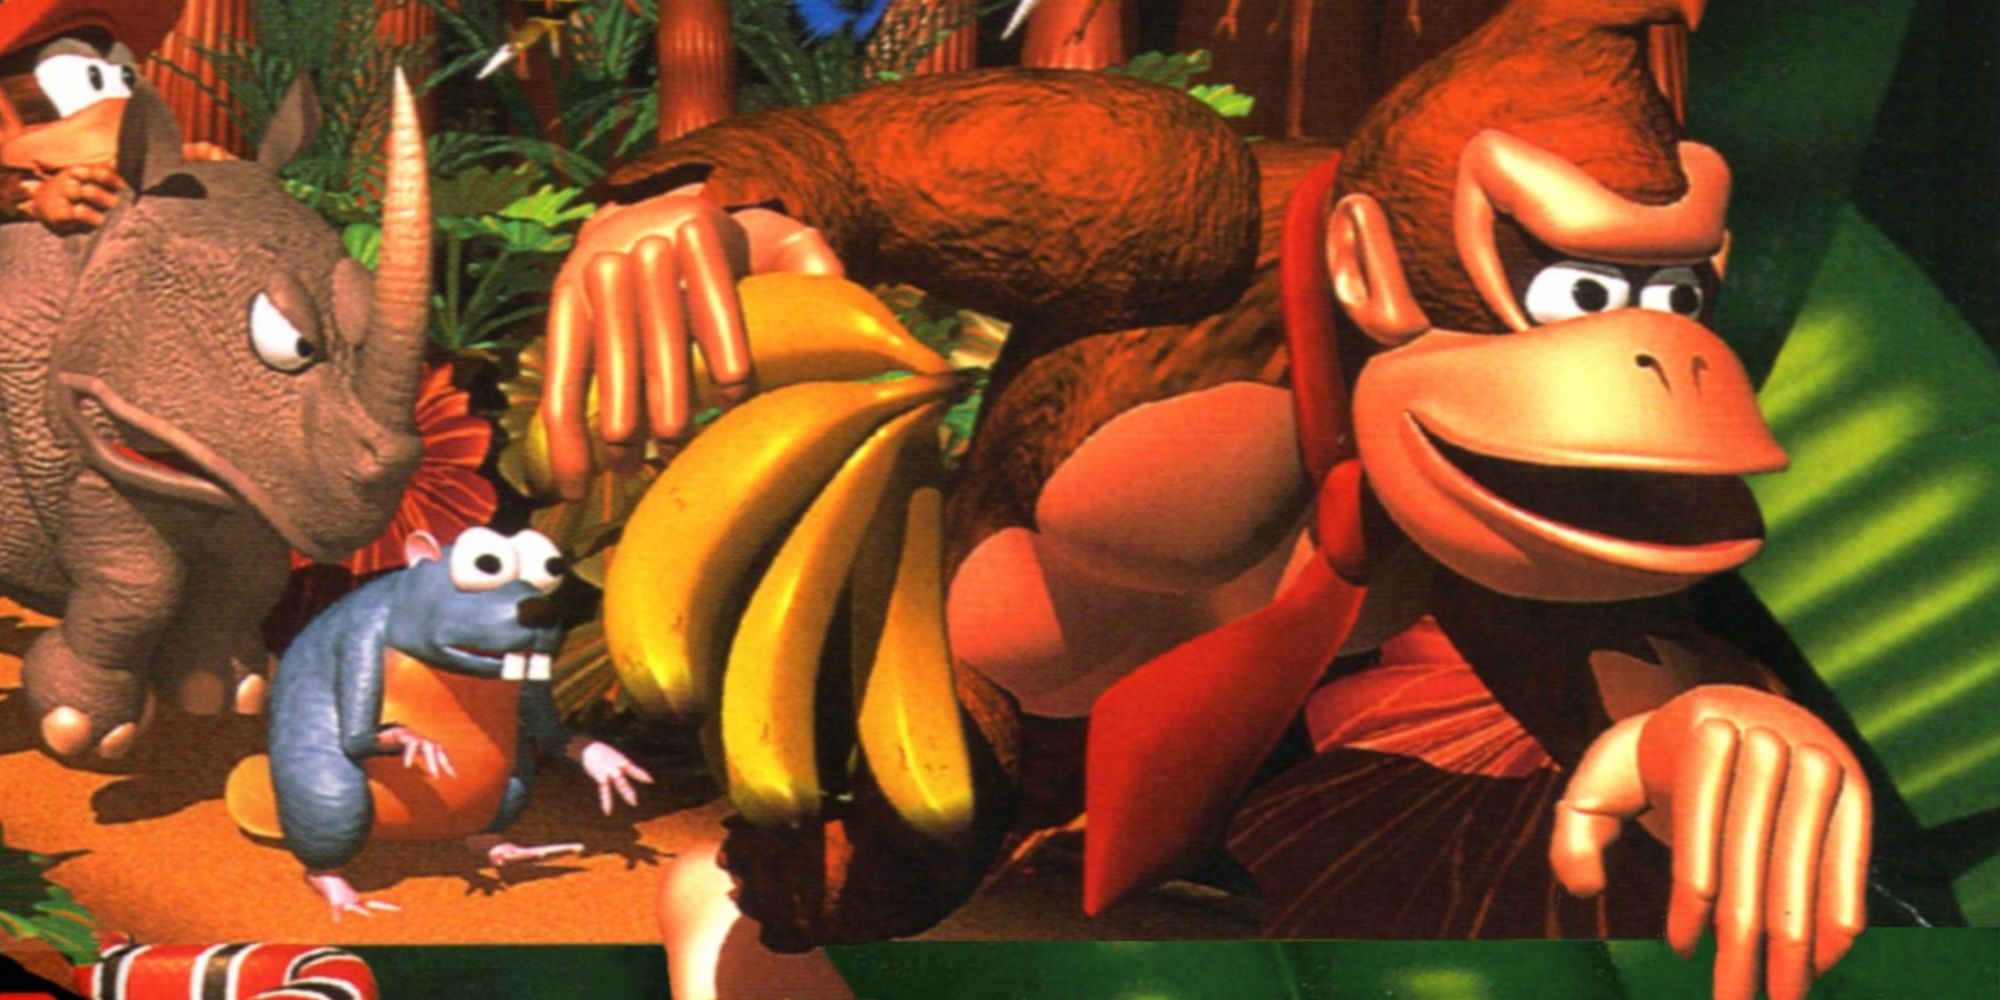 Donkey Kong Carrying Some Bananas